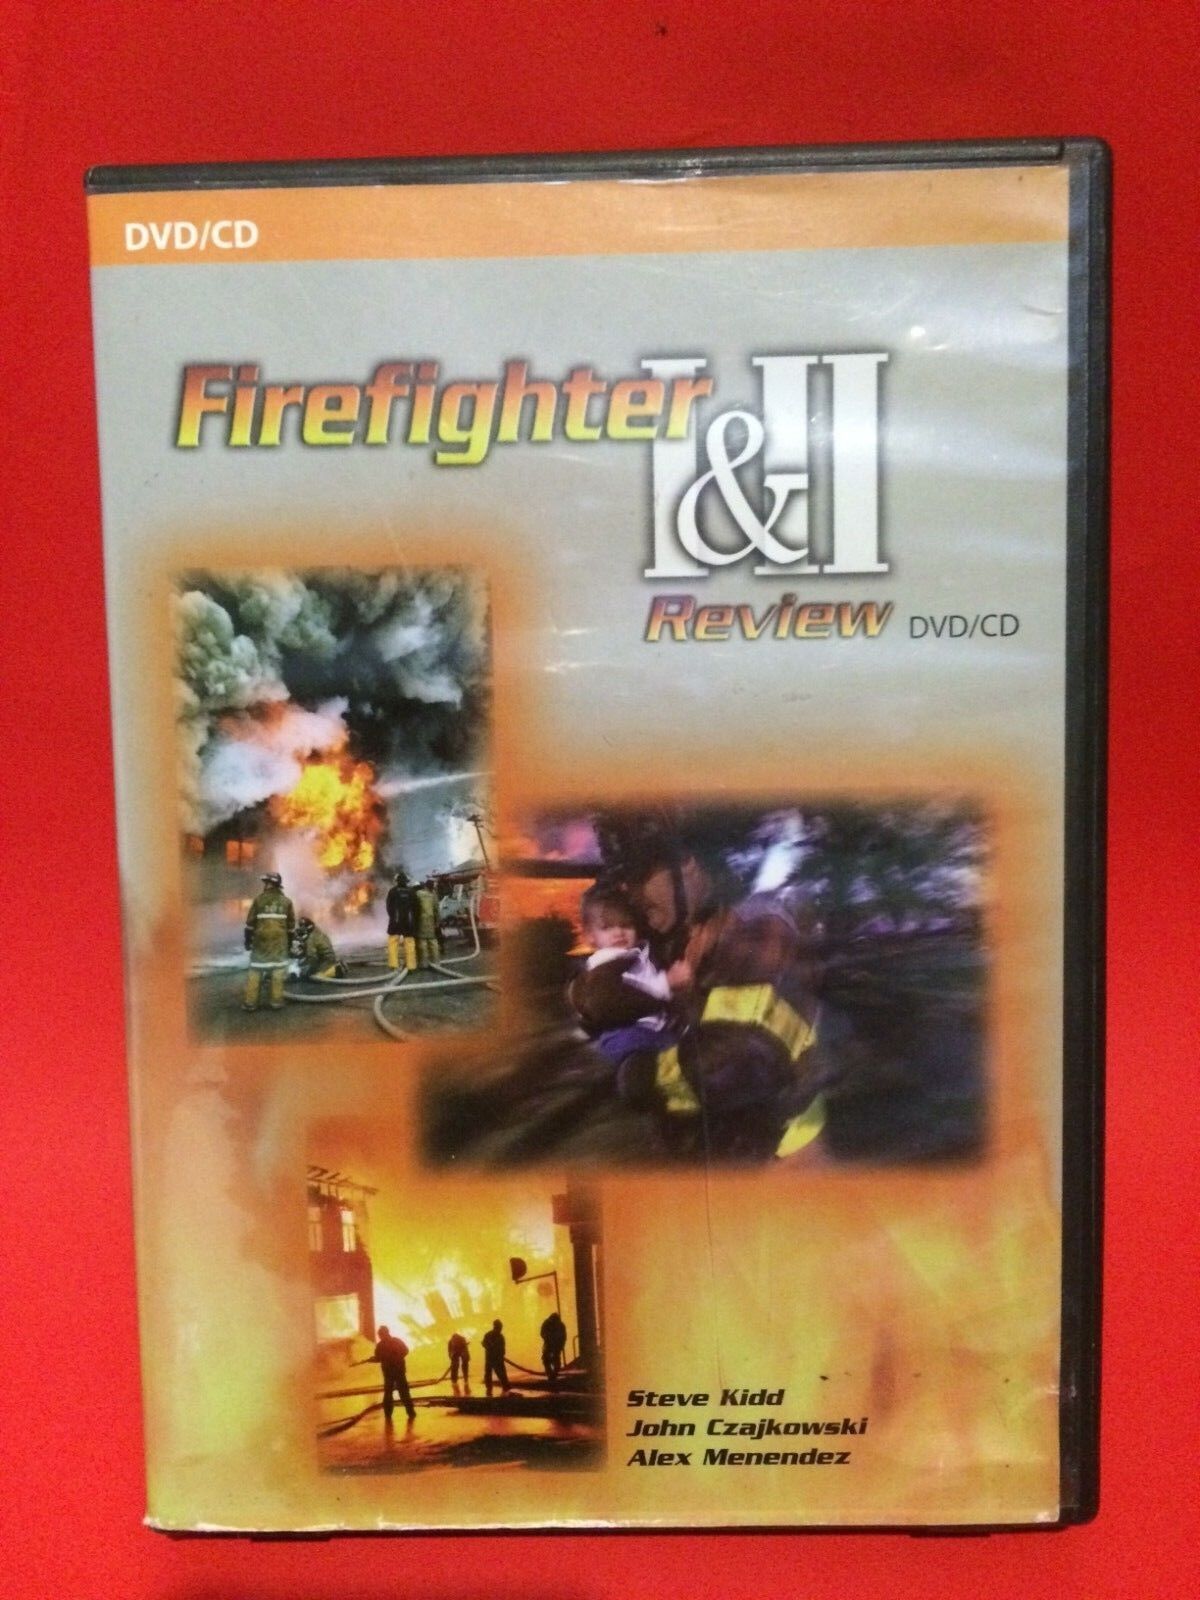 Firefighter 1 & 2 Review DVD/CD McGraw Hill Kidd Czajkowski Alex Menendez NFPA